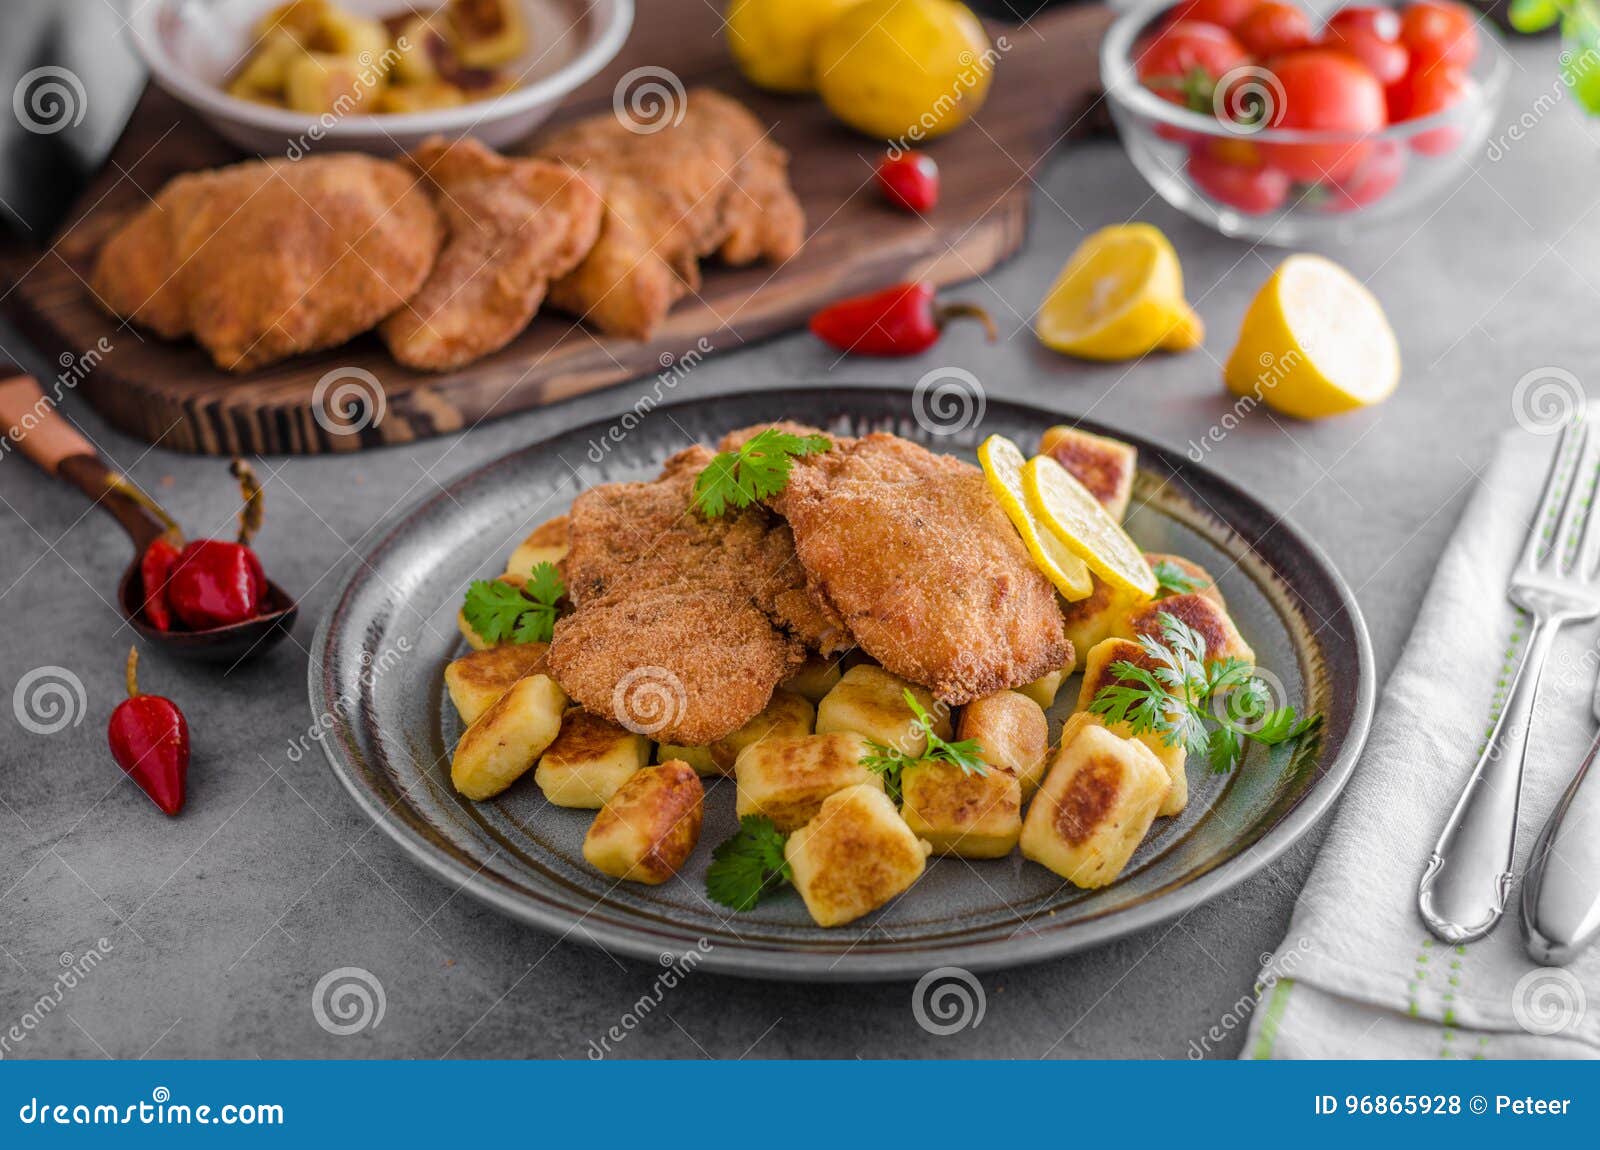 Schnitzel Original with Lemon and Gnocchi Fried Stock Photo - Image of ...